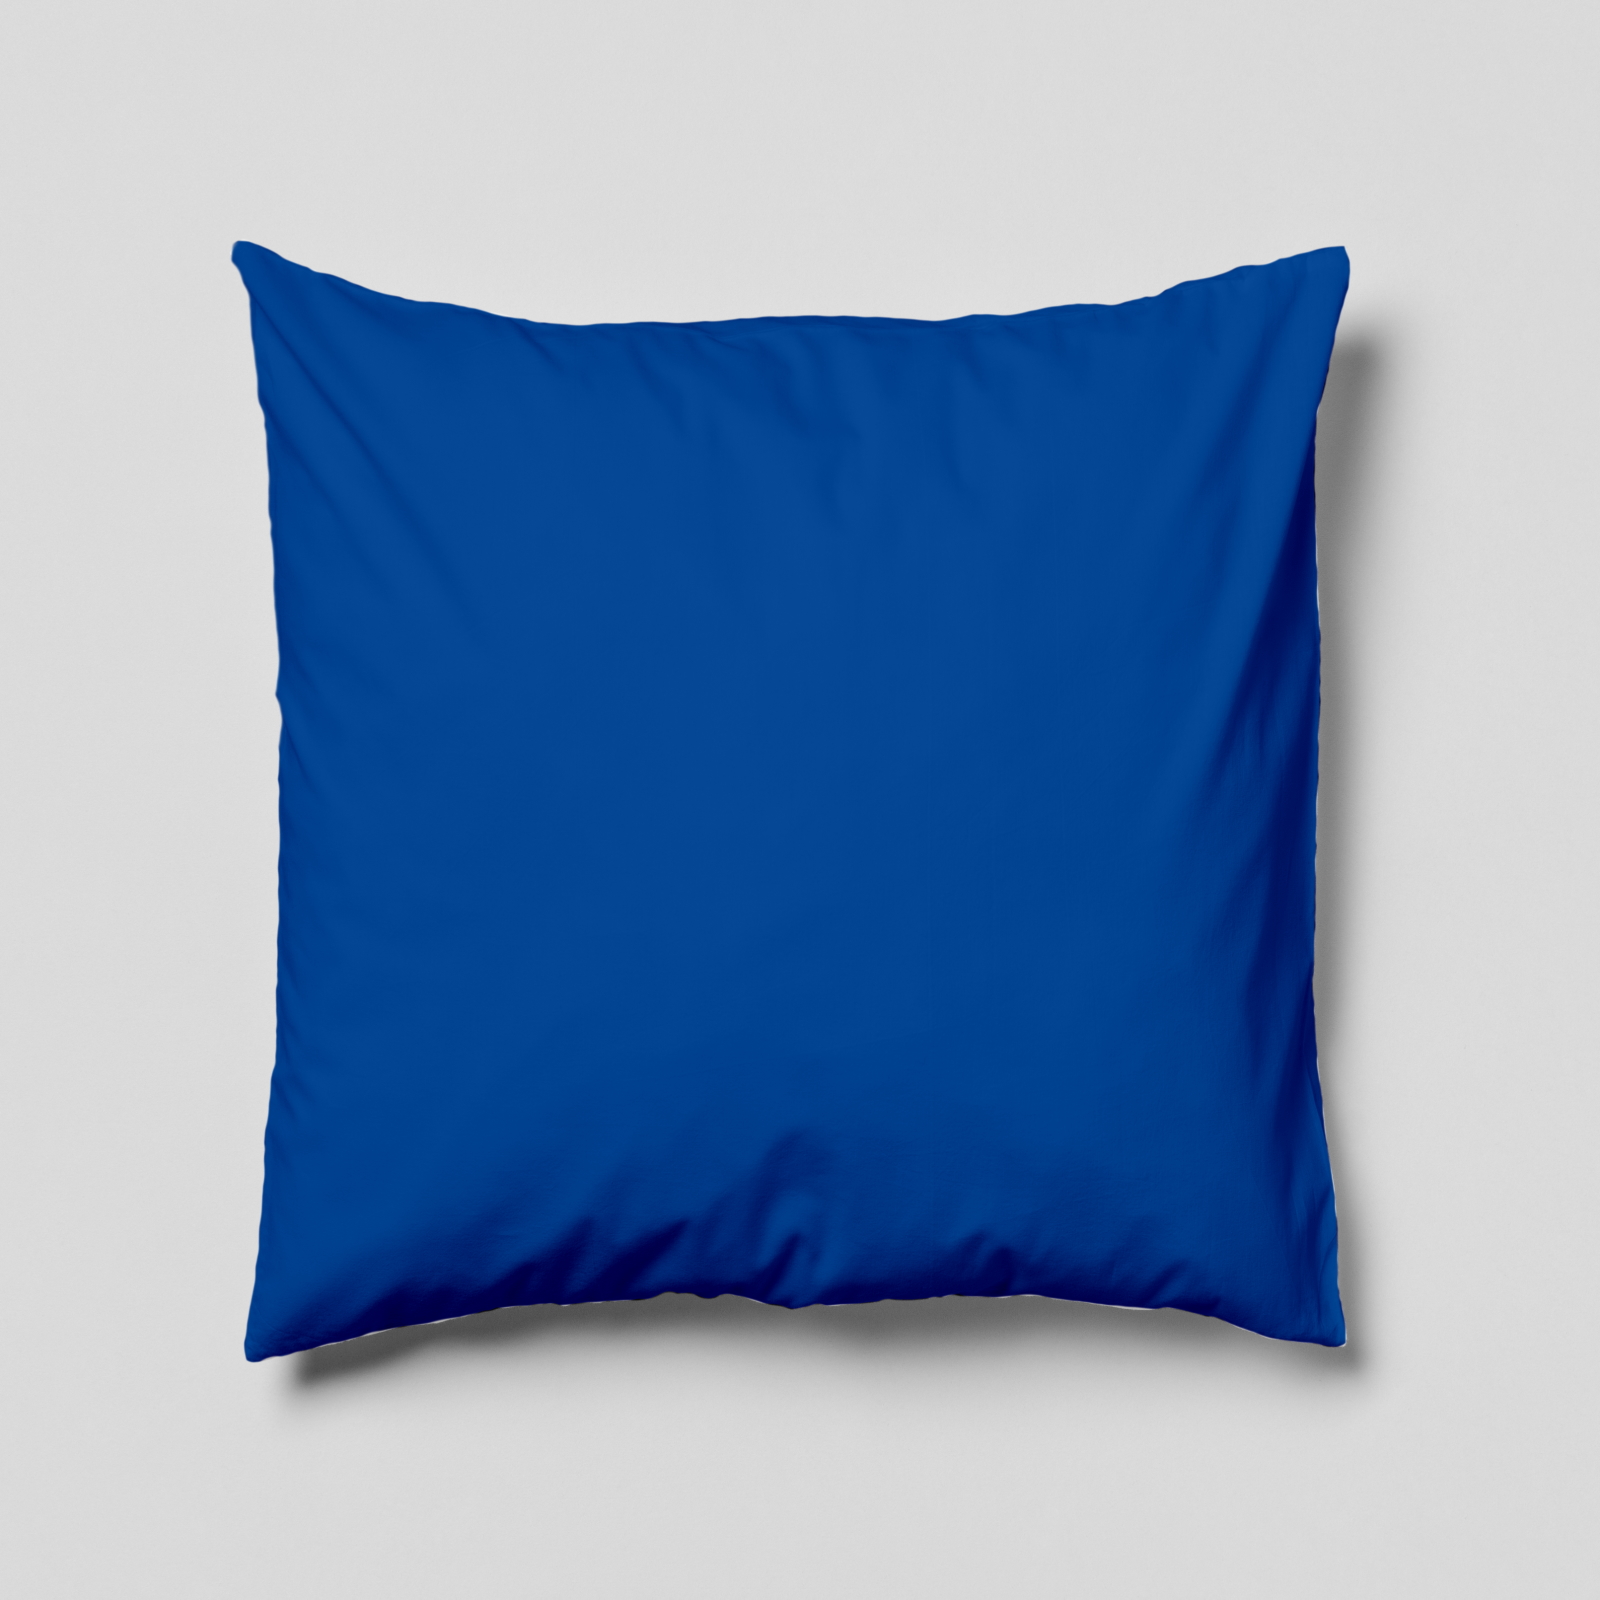 Komplettkissen Polyester-Blau / 50x50 cm